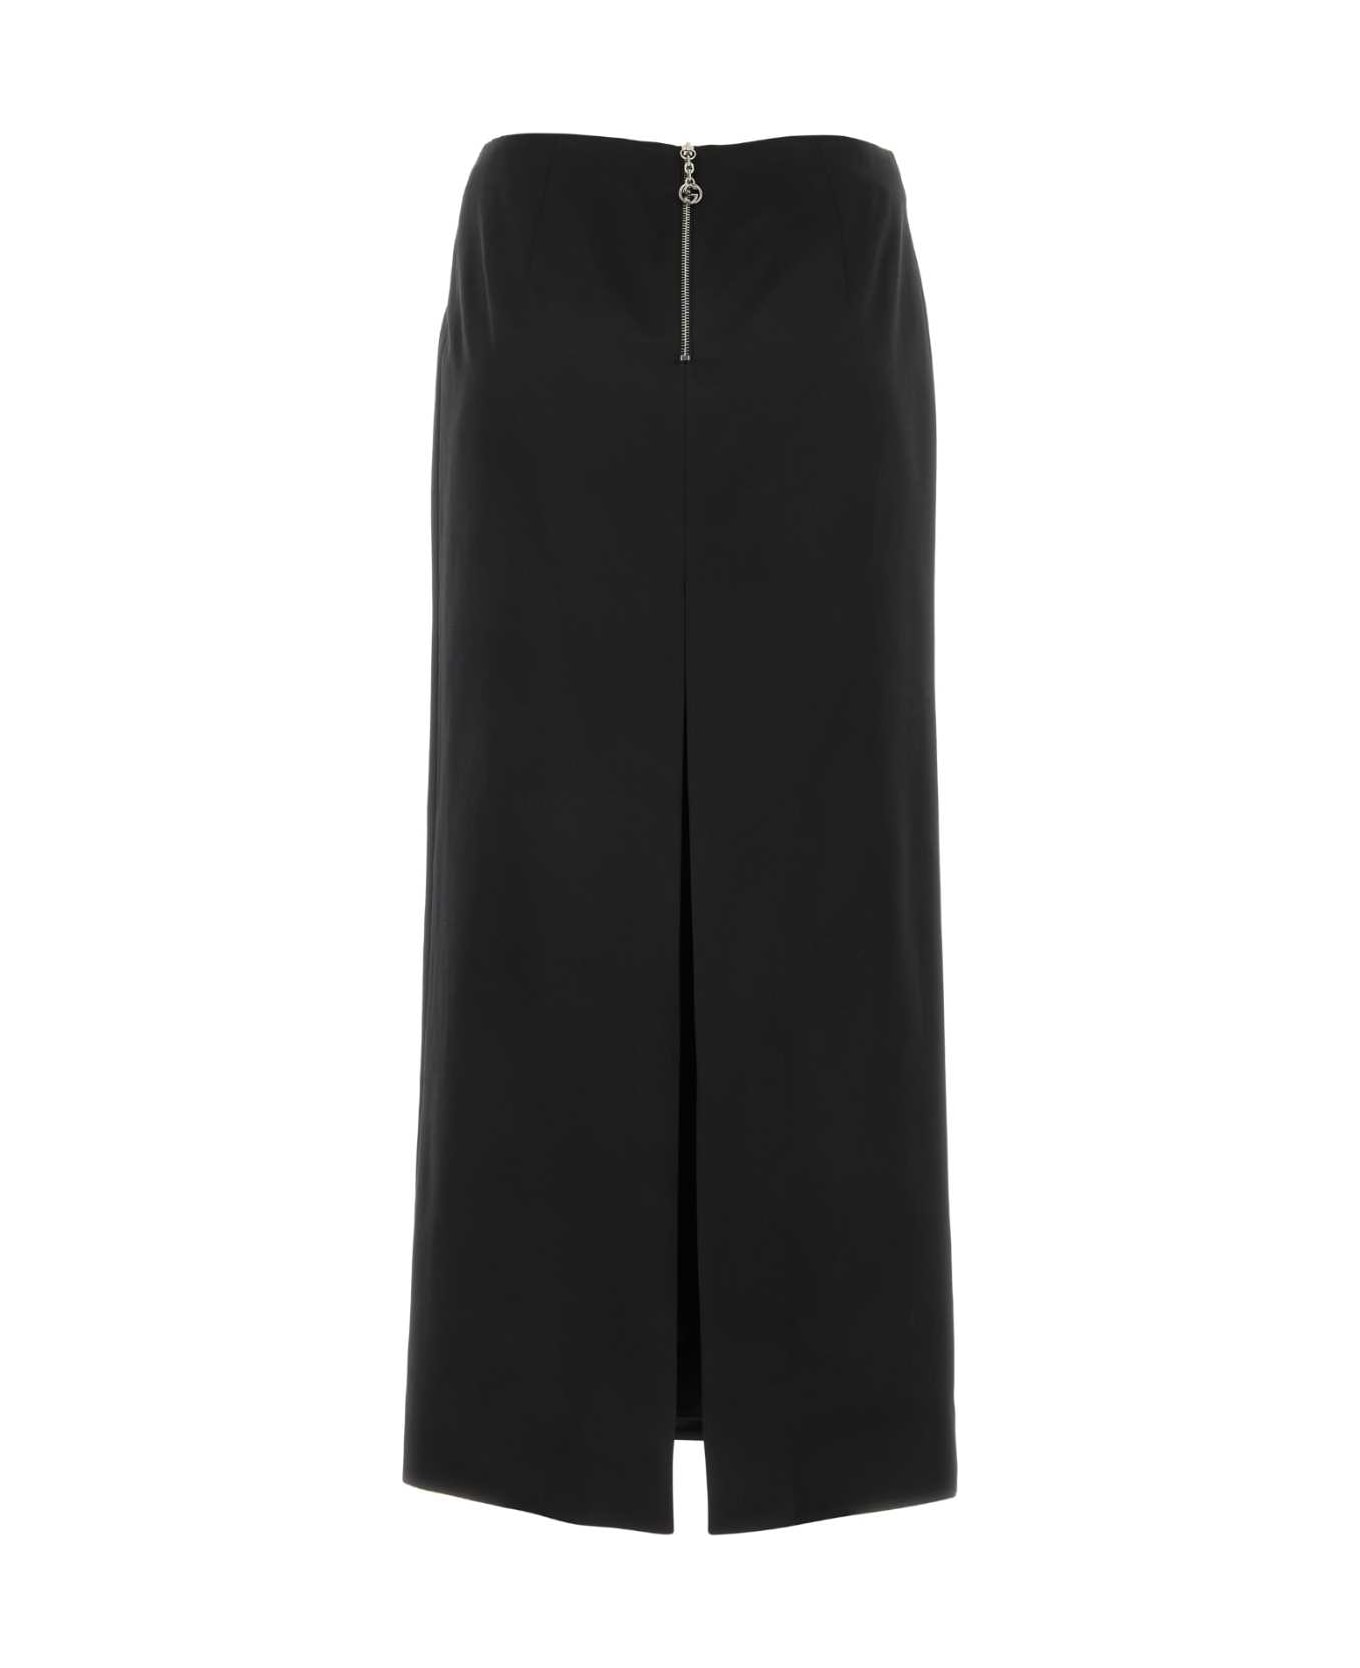 Gucci supreme Black Satin Skirt - 1000